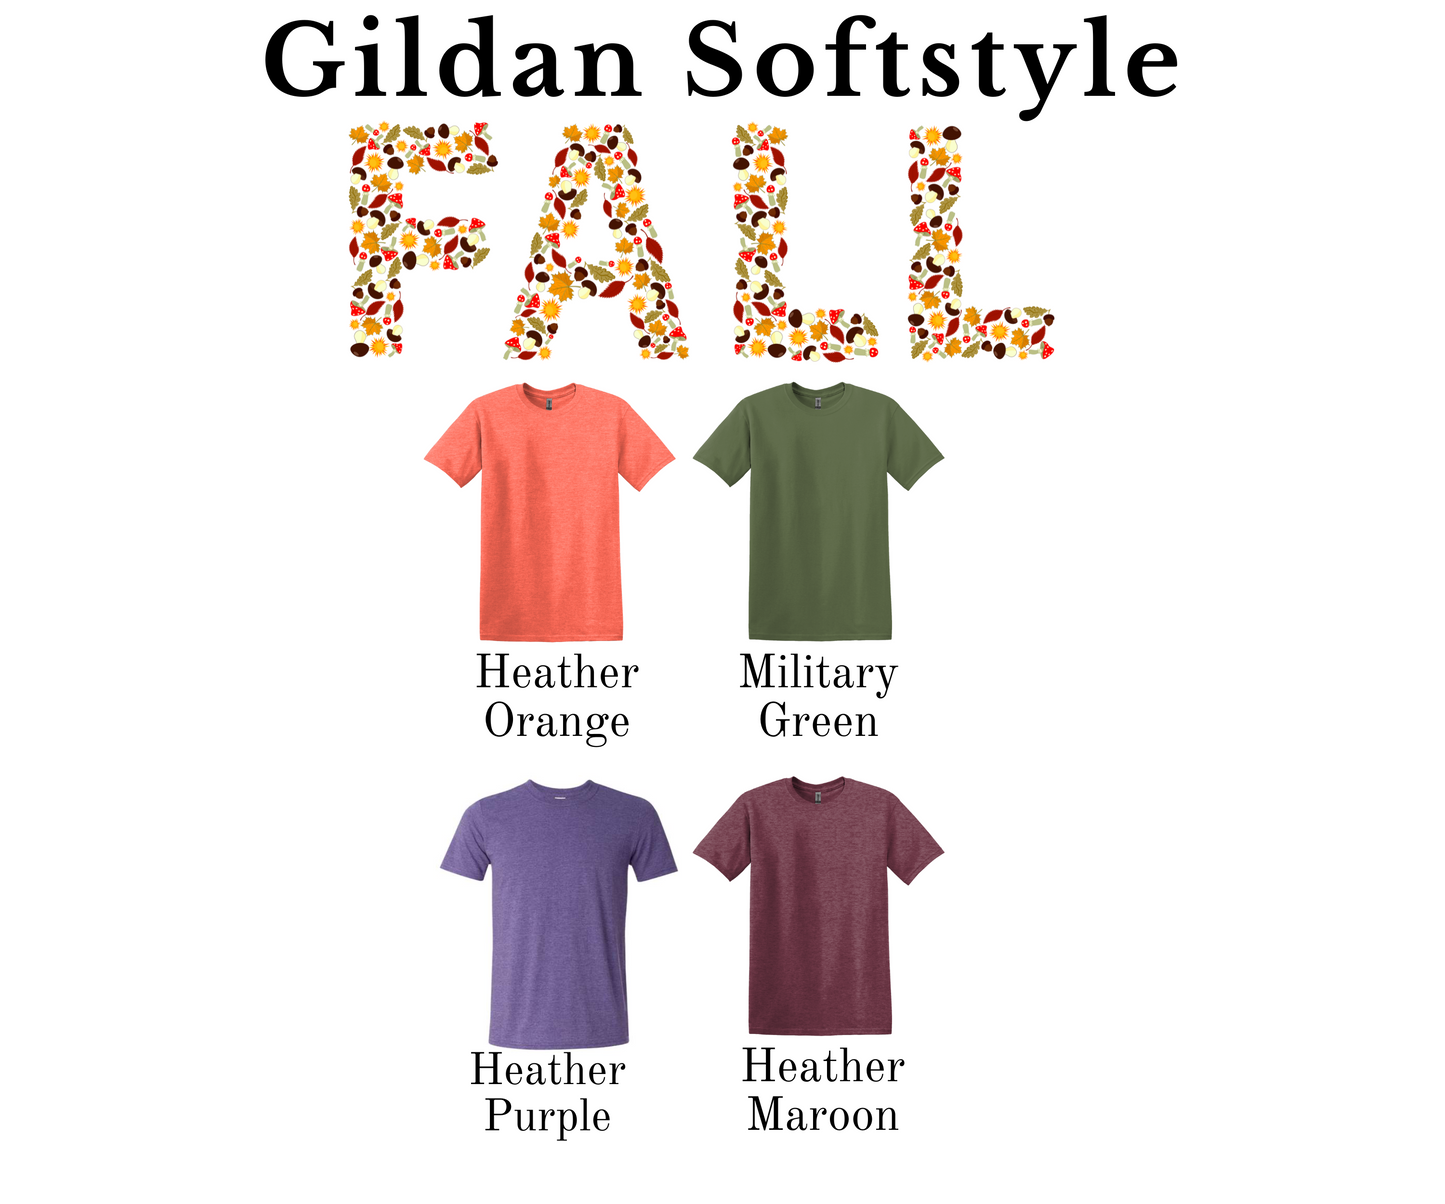 Stay Spooky Skeleton Pumpkin Gildan Softstyle T-shirt